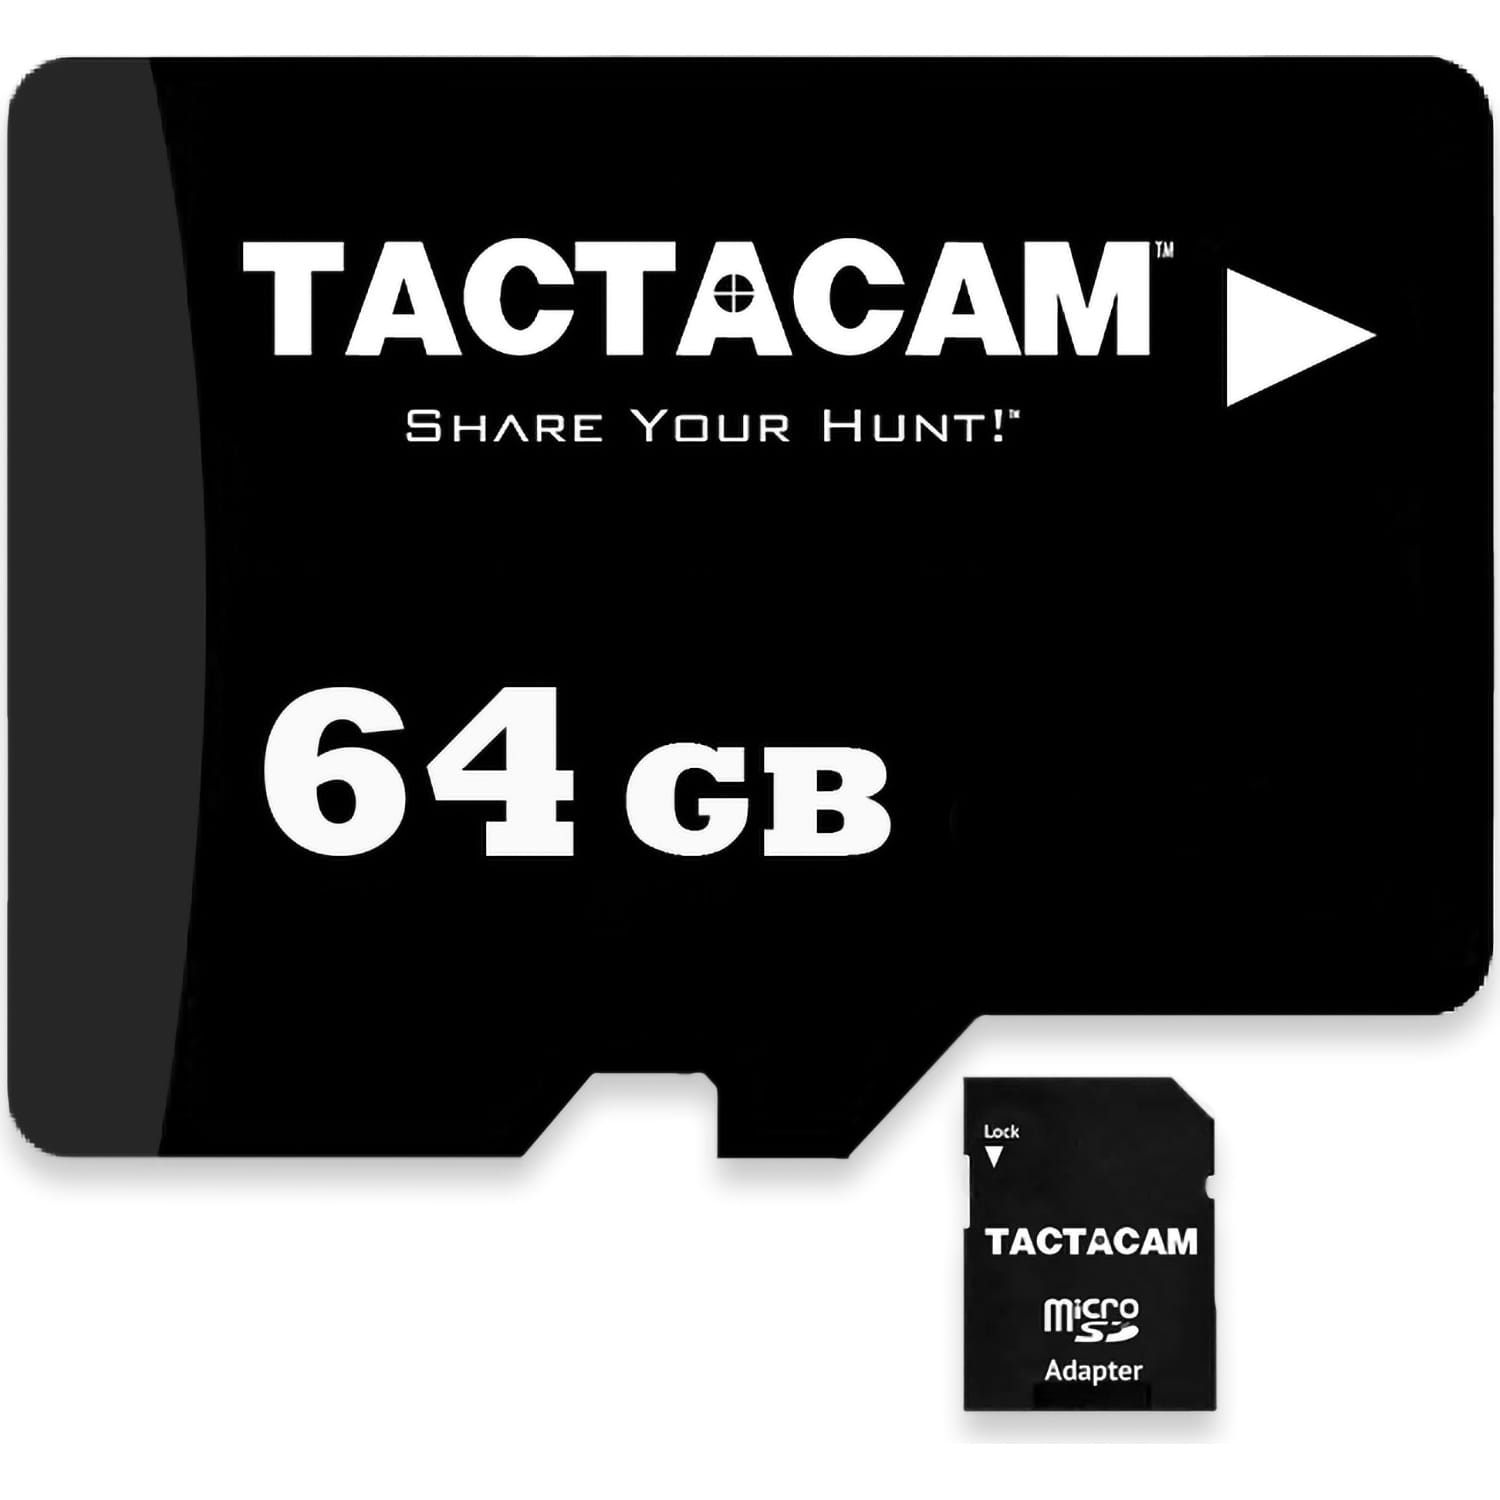 Tactacam® 64 GB Micro SD Card